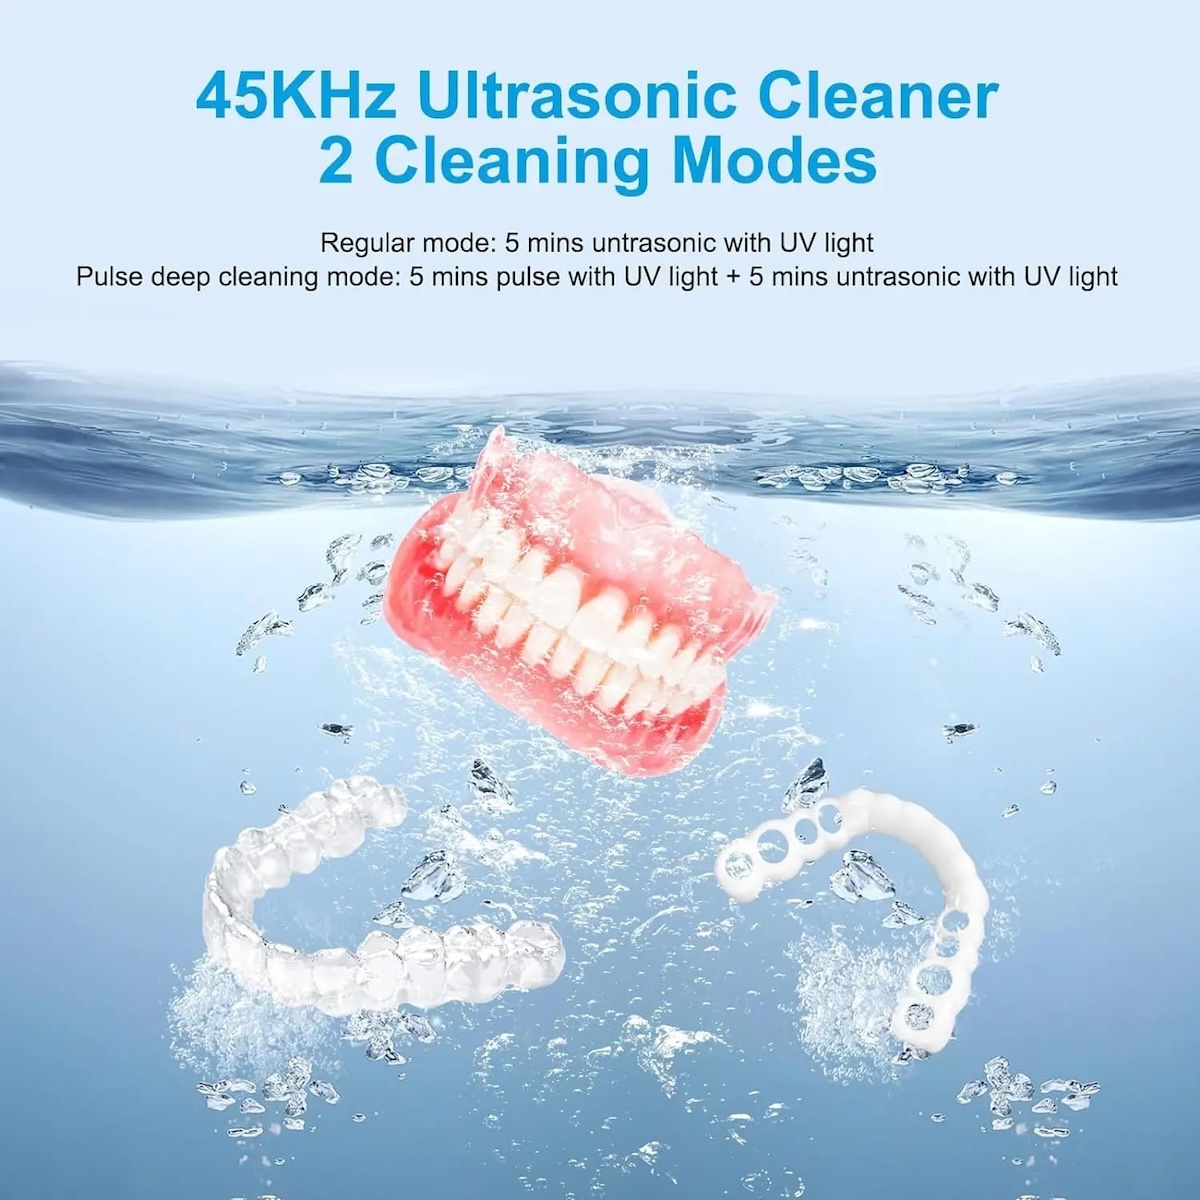 Ultrasonic cleaner - denture false teeth cleaner